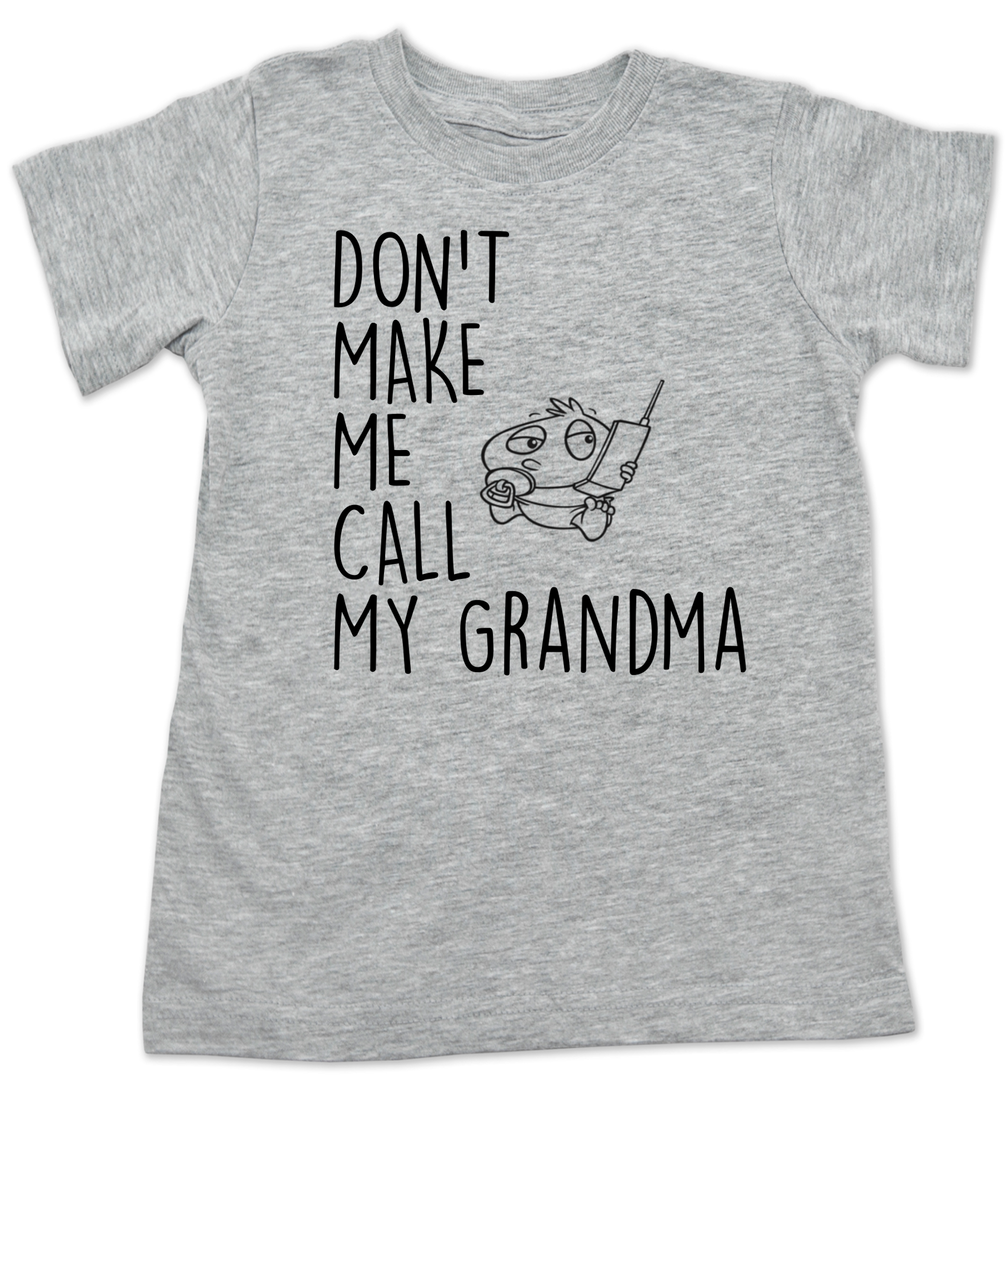 Grandma T-Shirt Funny Grandma Gift Grandmother Granny Birthday Shirt Mothers Day